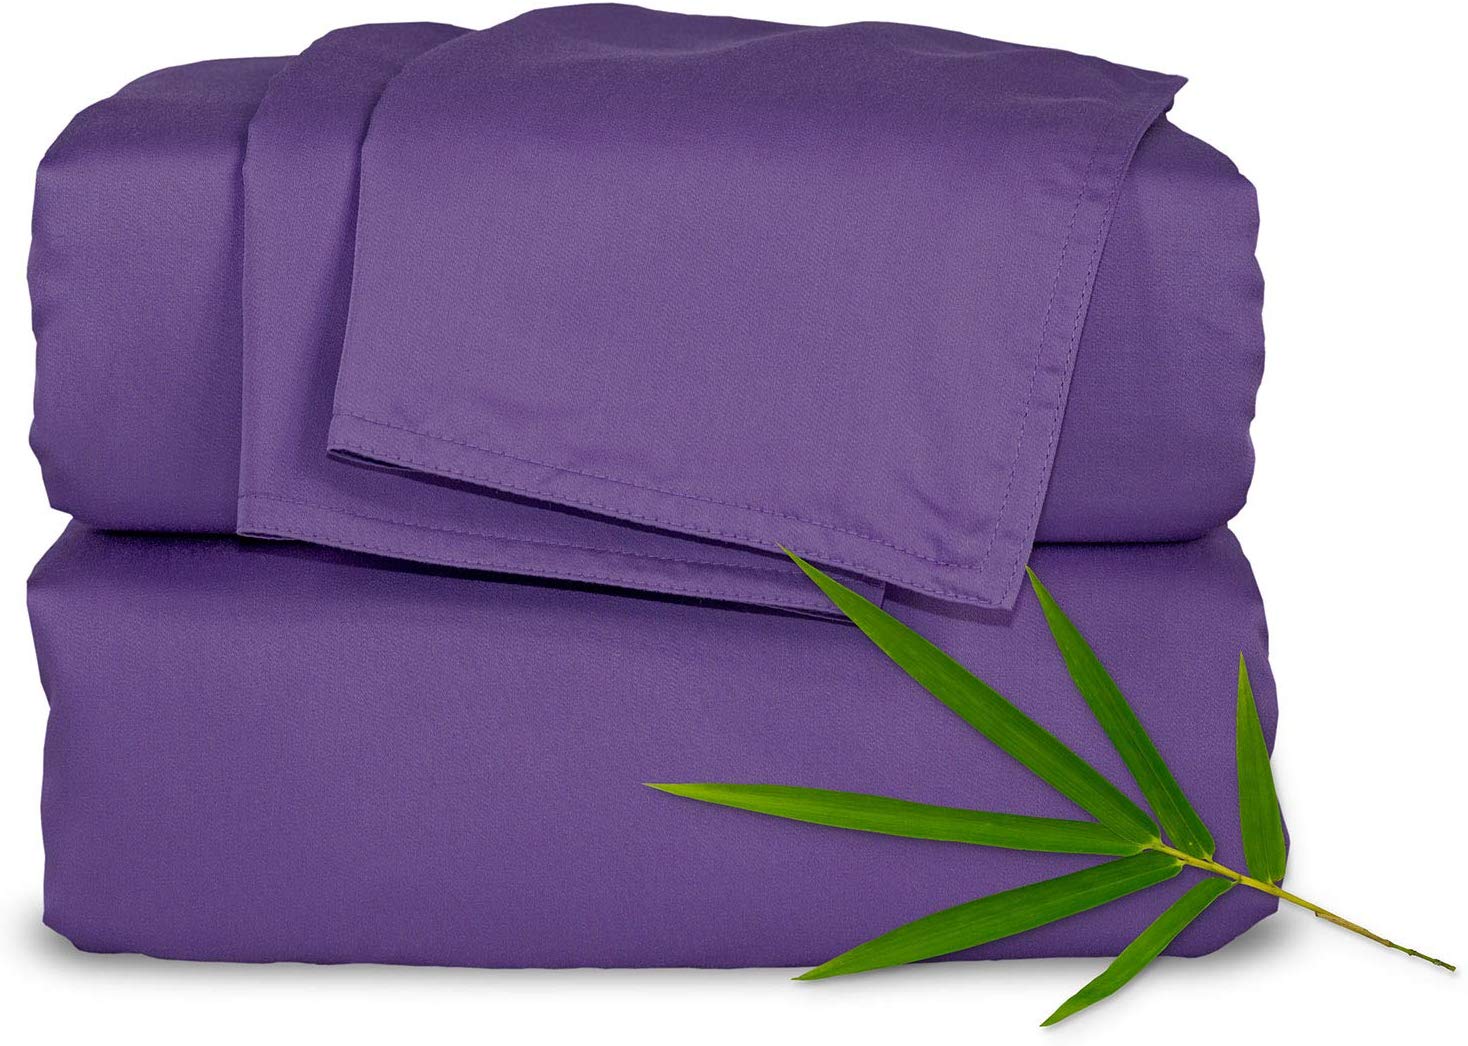 bamboo sheets for purple mattress